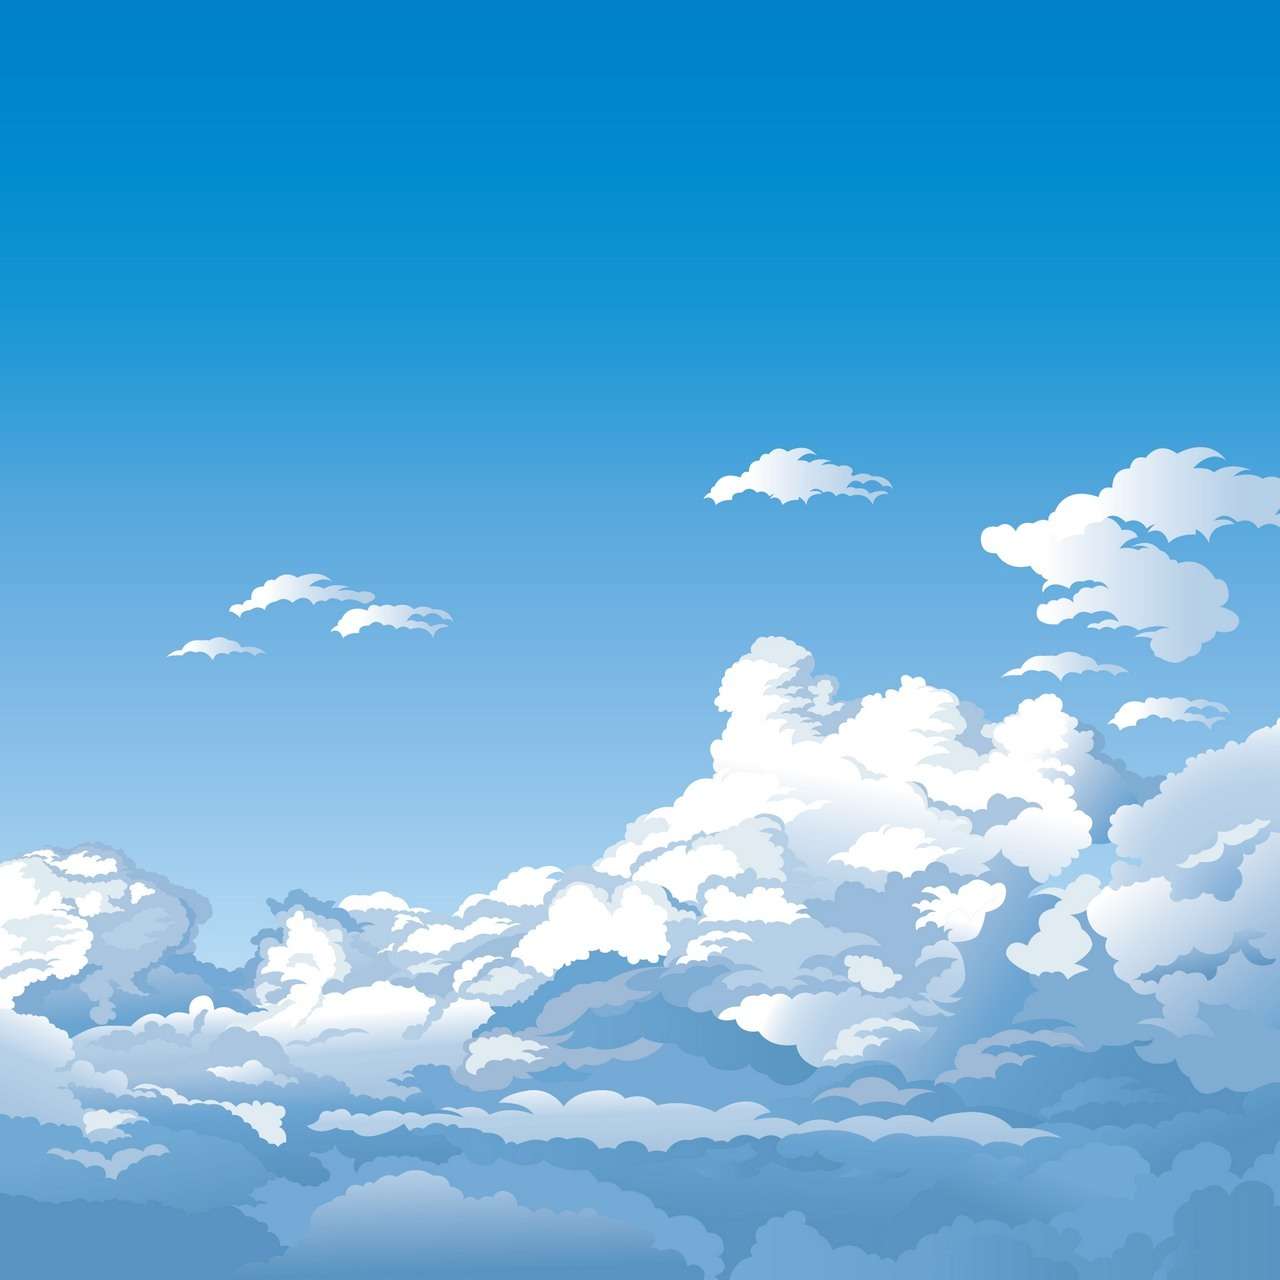 Cloud Background 02